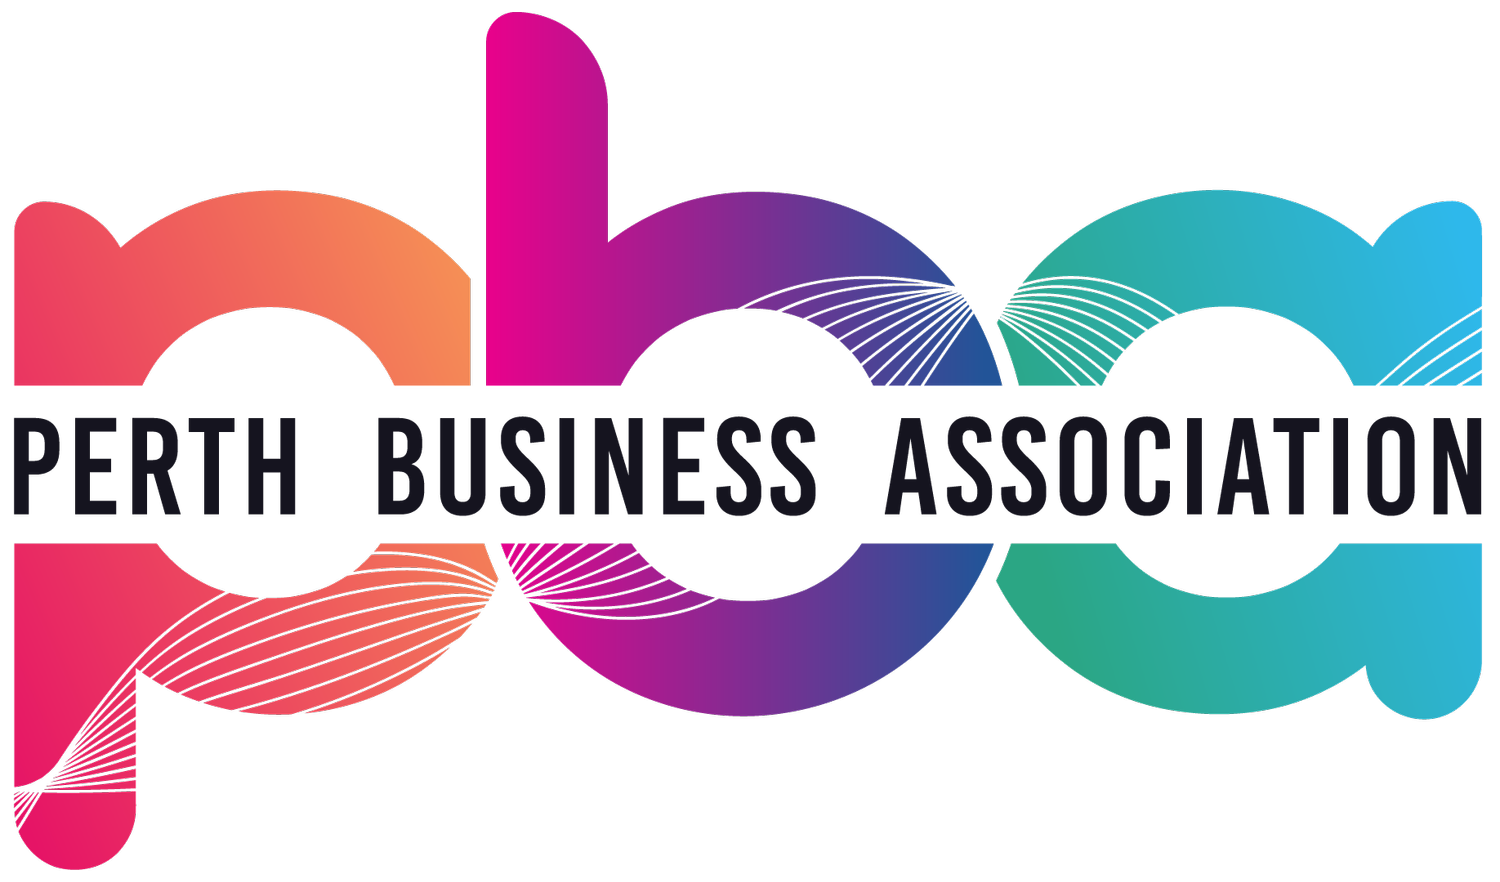 Perth Business Association